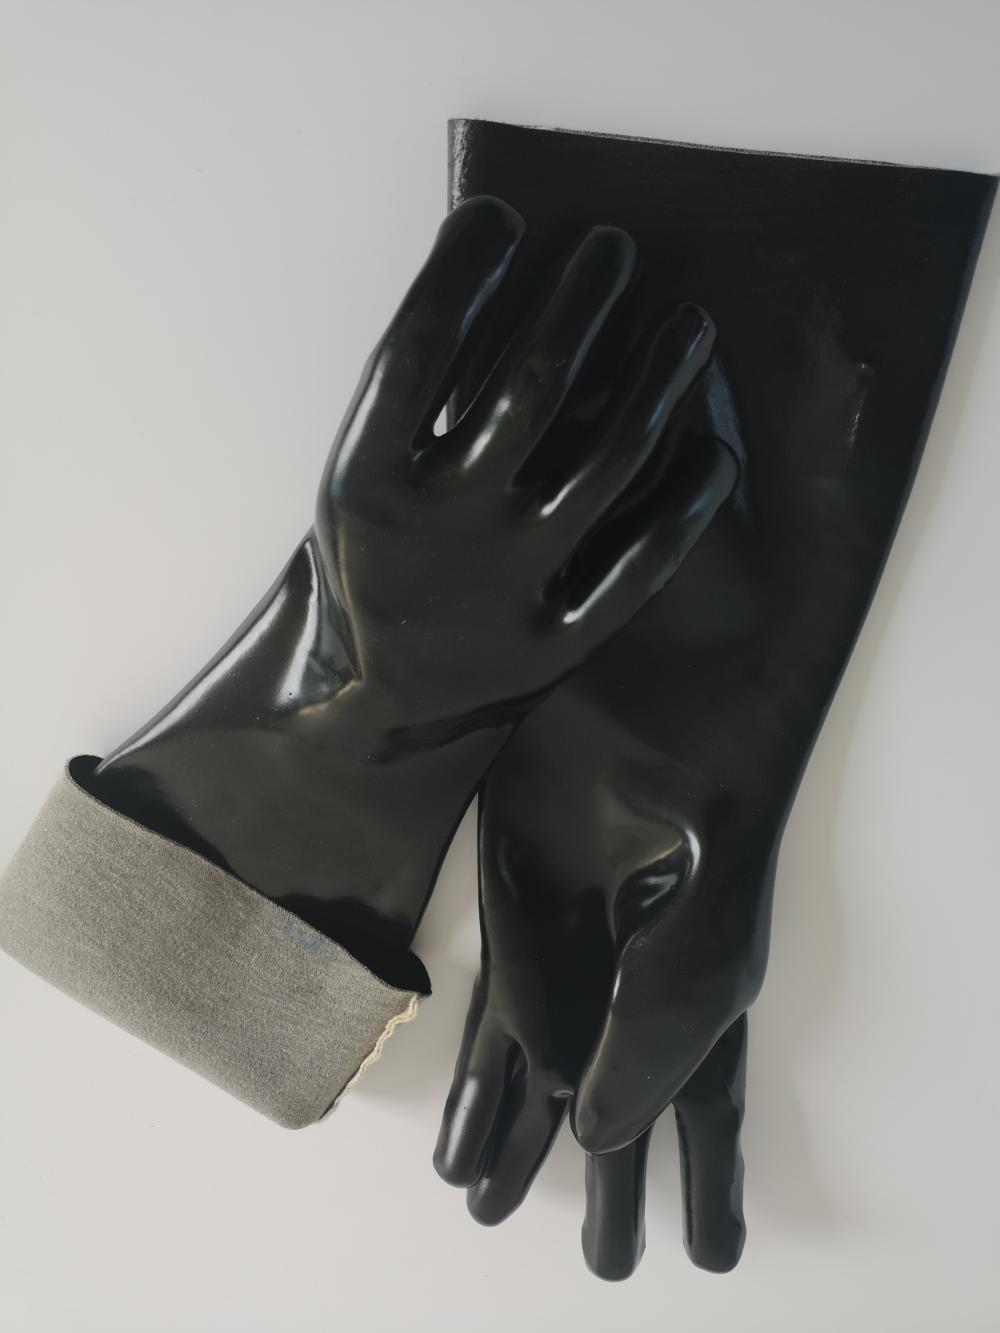 Black PVC gloves smooth finish interlock liner 16"